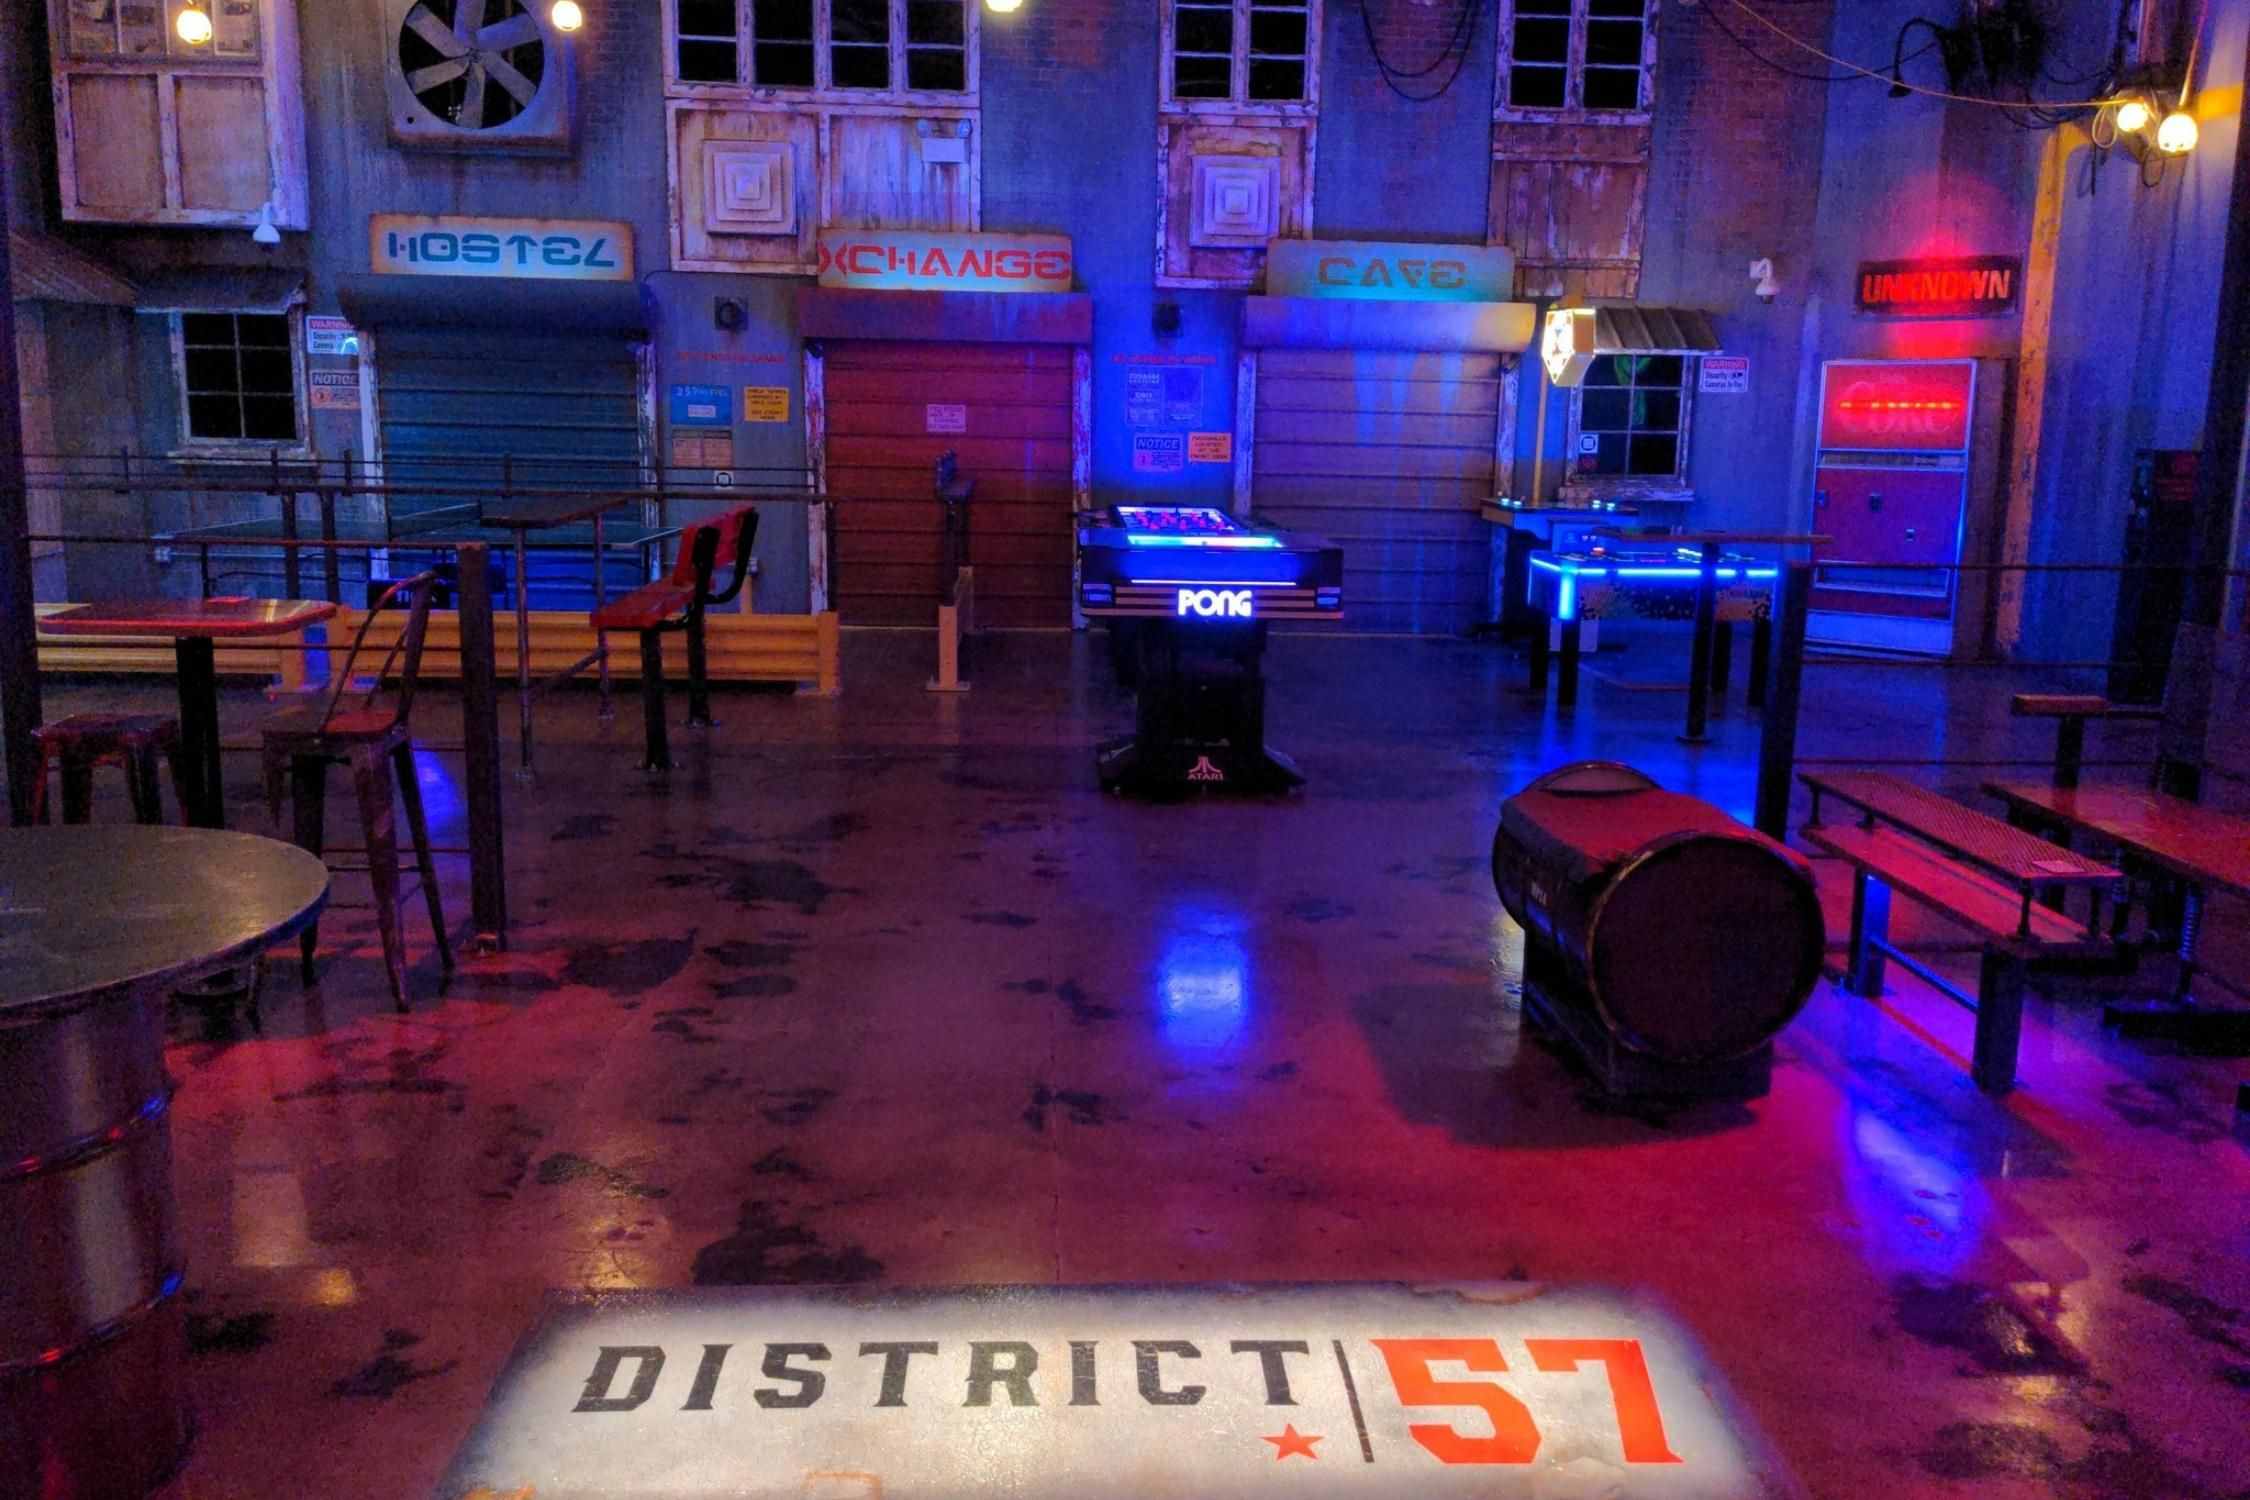 District 57